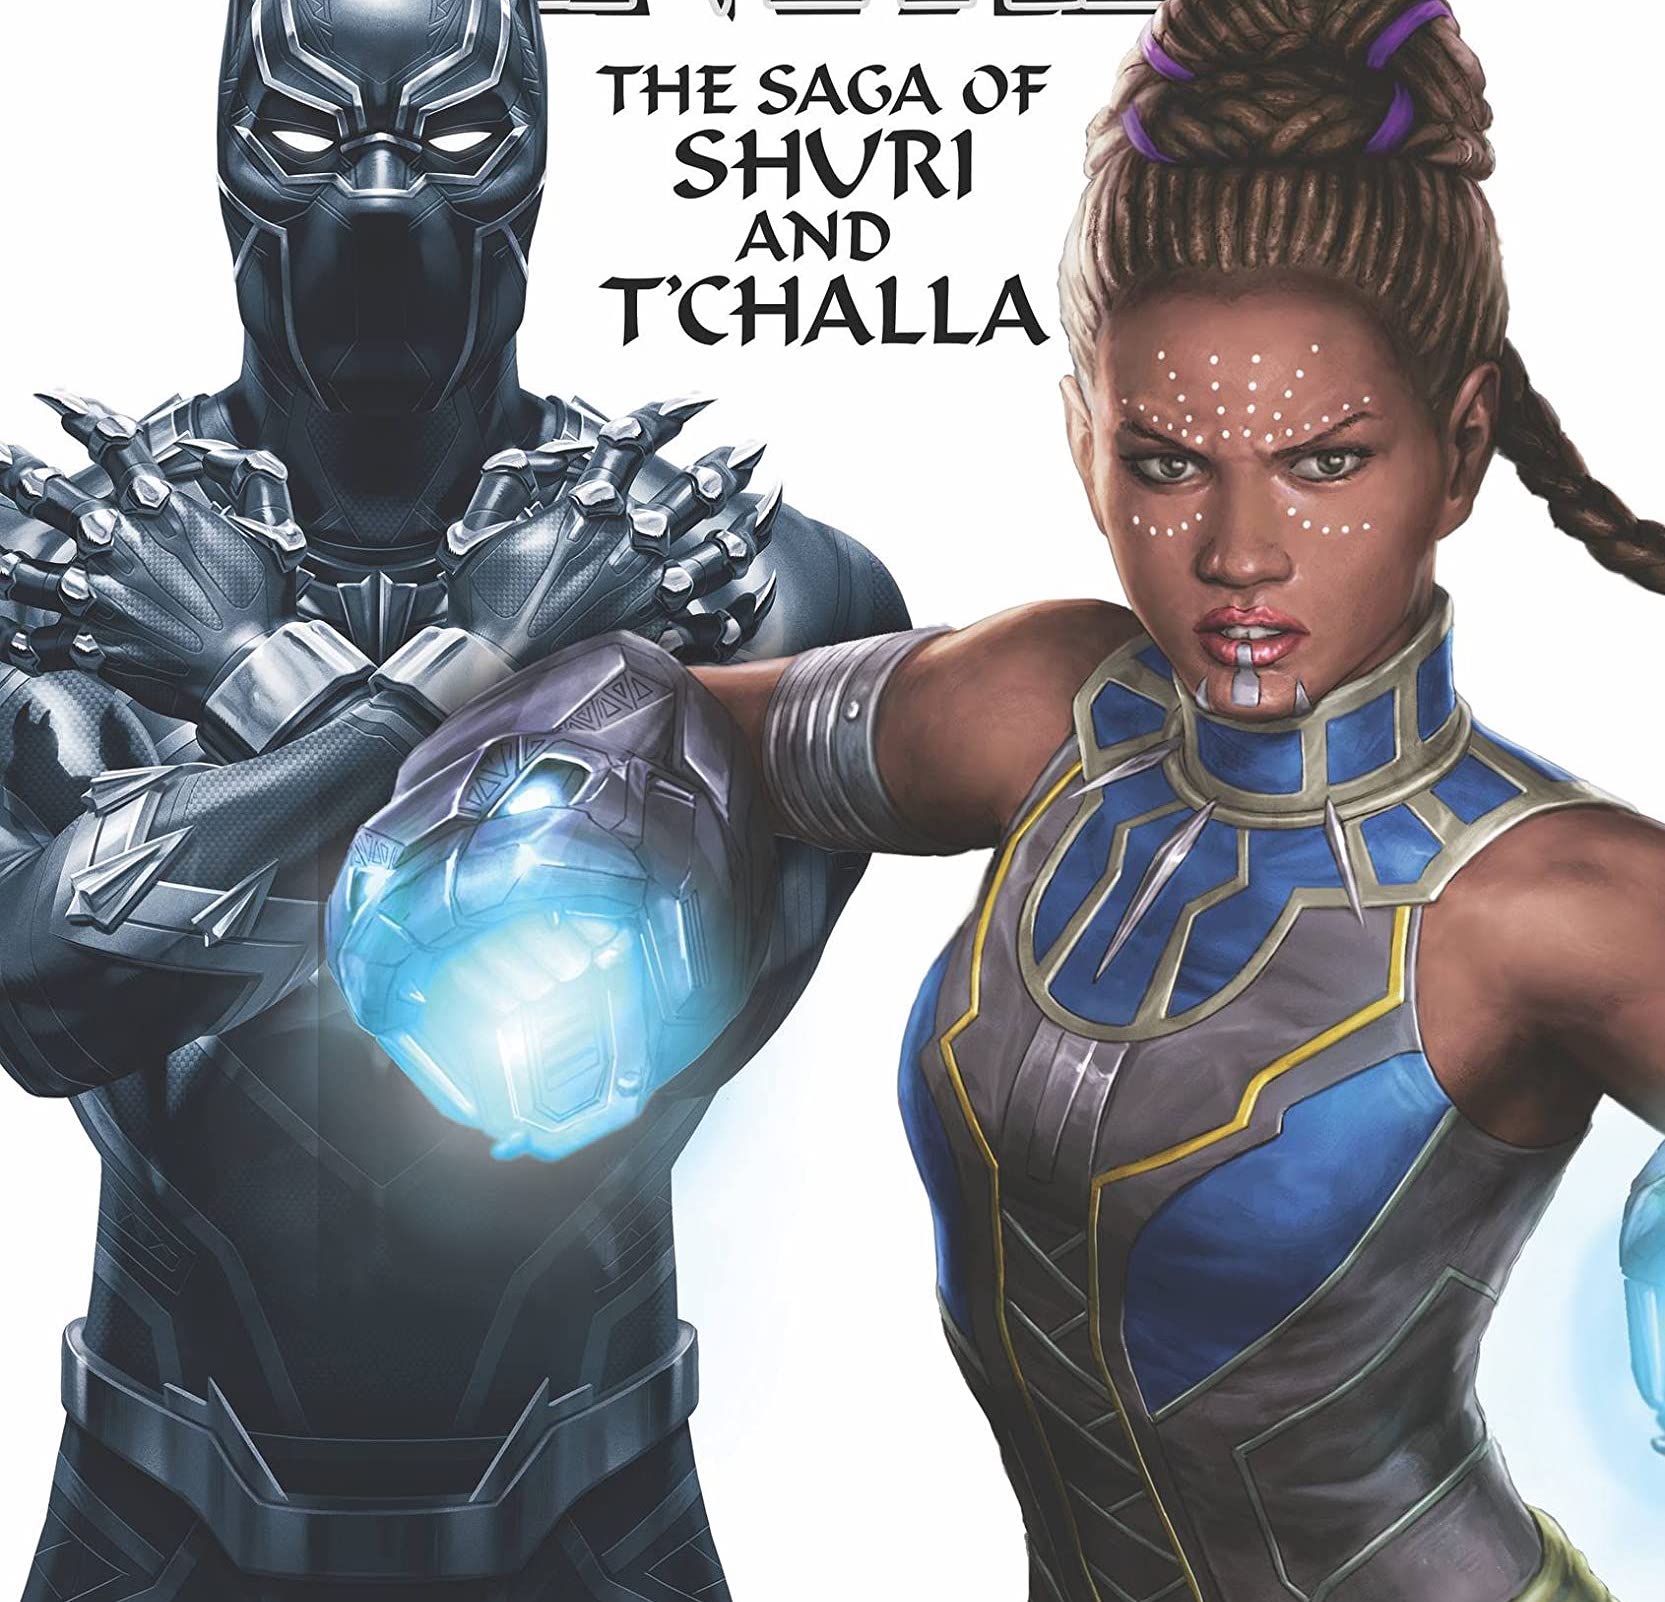 Black Panther (T'Challa) Latest News Updates